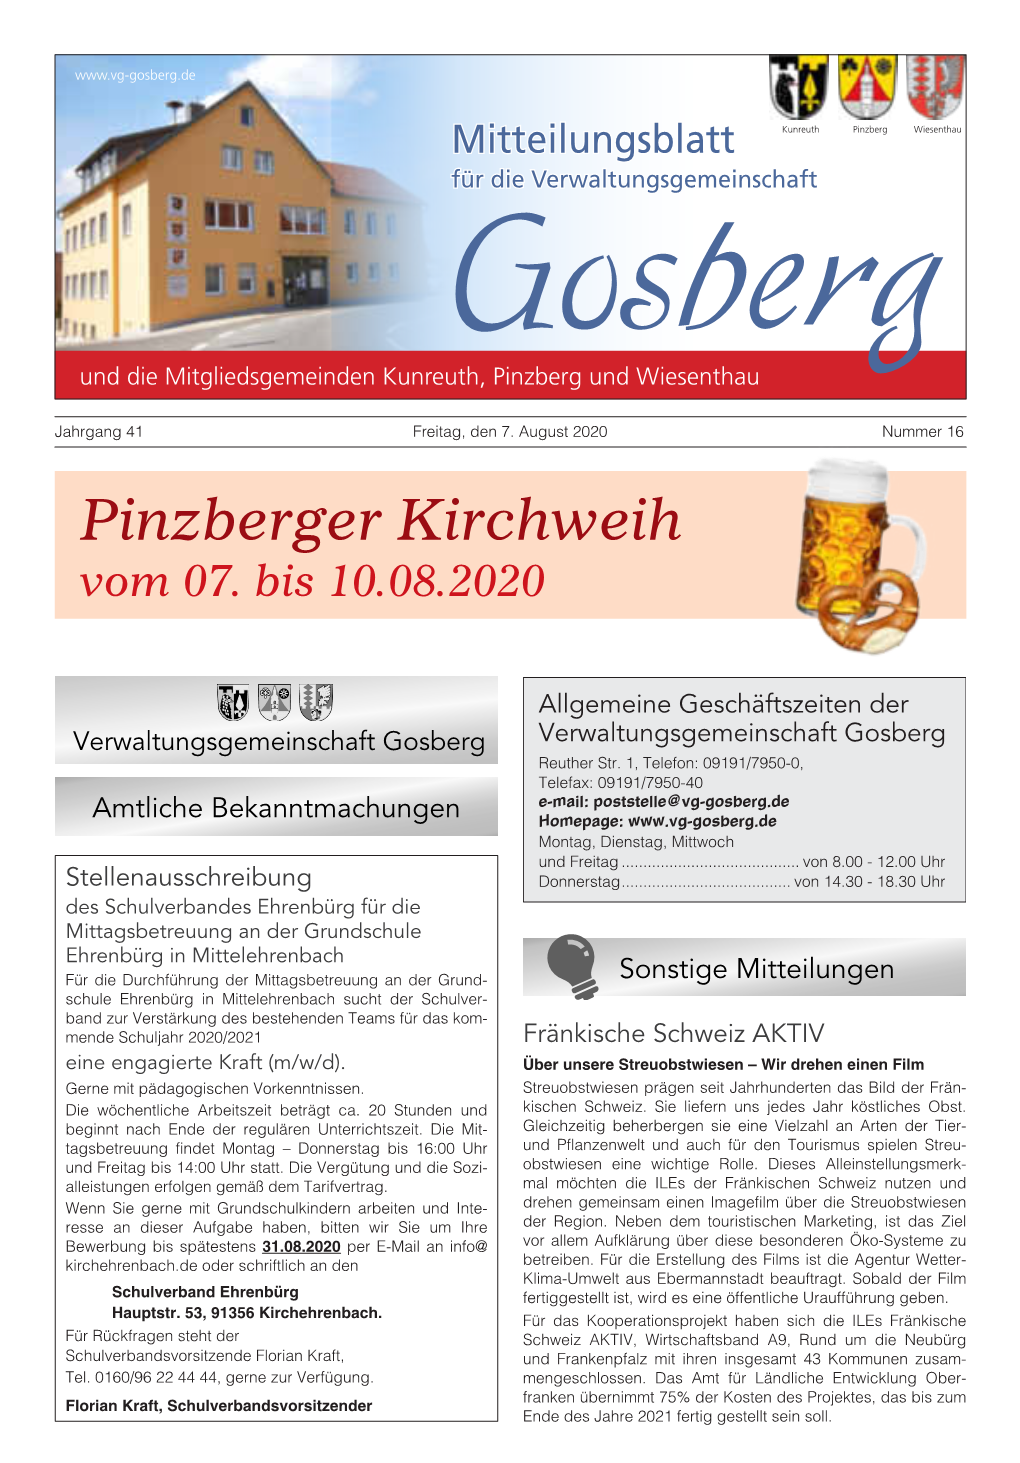 Pinzberger Kirchweih Vom 07